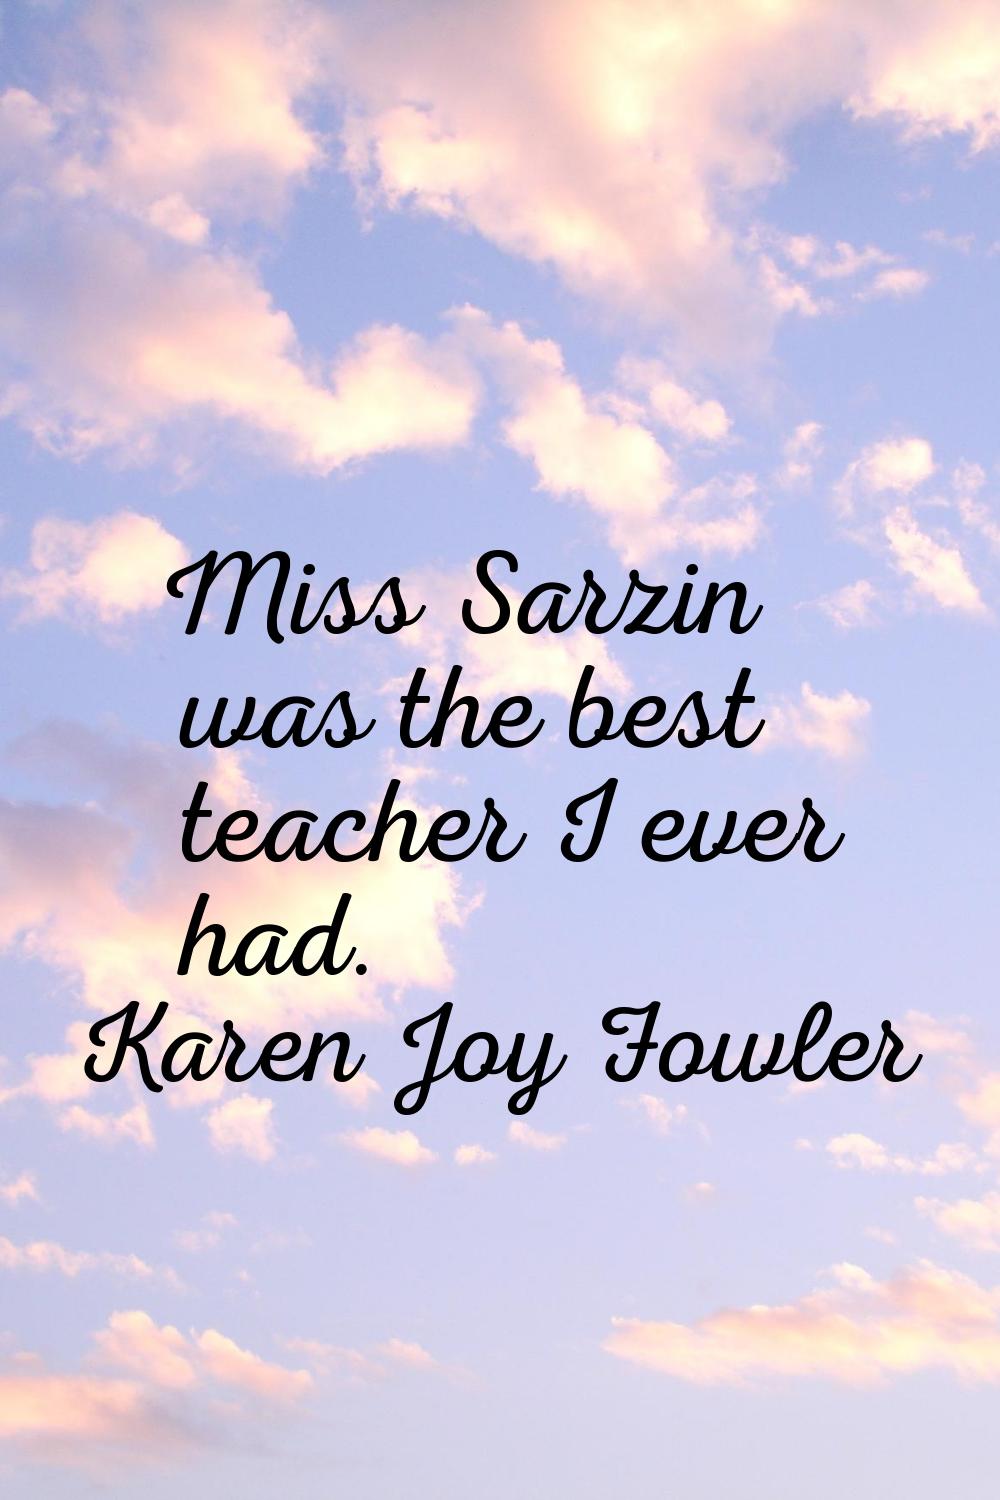 Miss Sarzin was the best teacher I ever had.